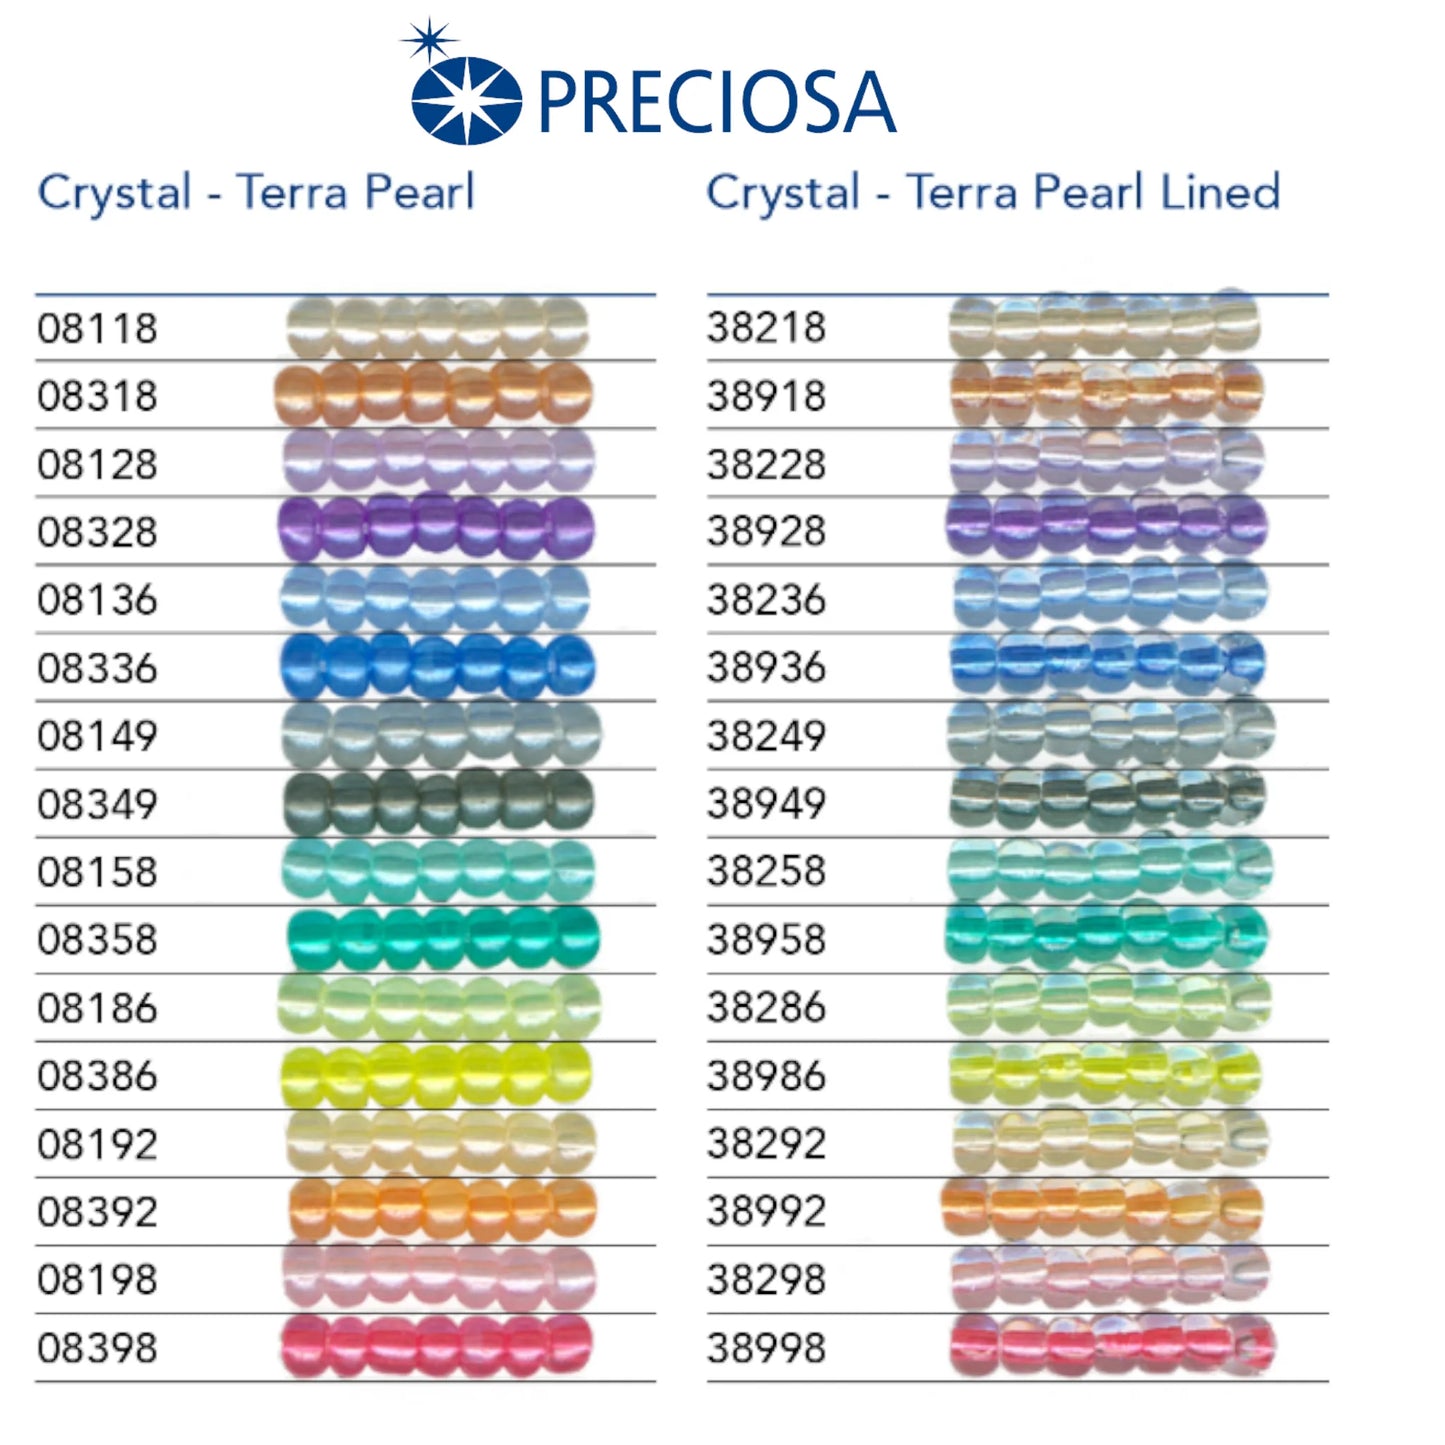 08192 Tschechische Rocailles PRECIOSA Rocailles 10/0 Pfirsich. Kristall - Terra Pearl.